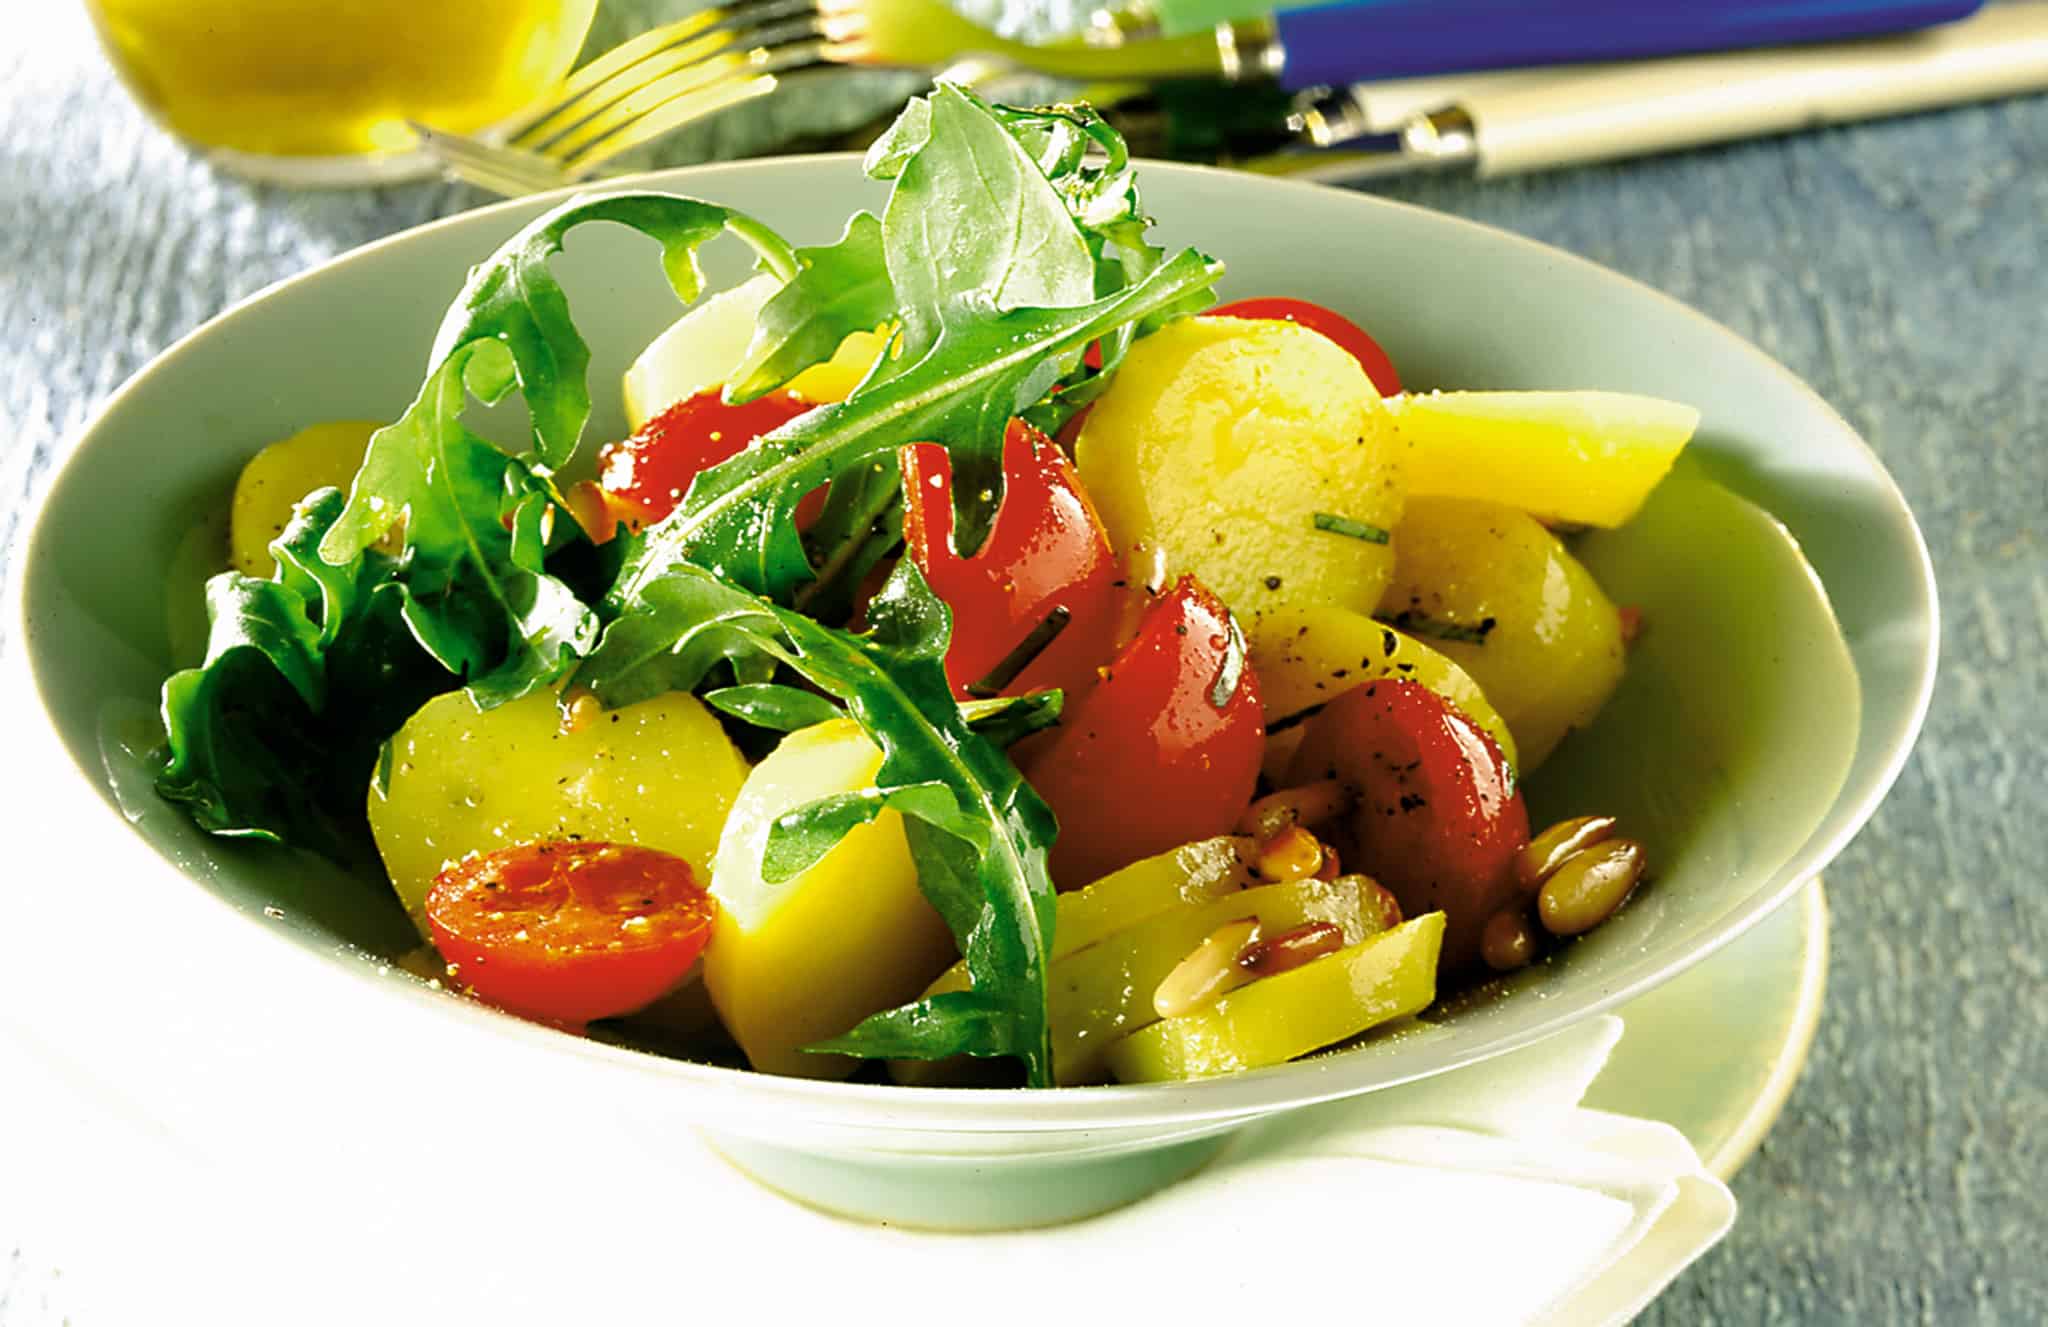 Rügener Rapsöl Kartoffelsalat mit Tomaten und Rucola - Rügener Rapsöl